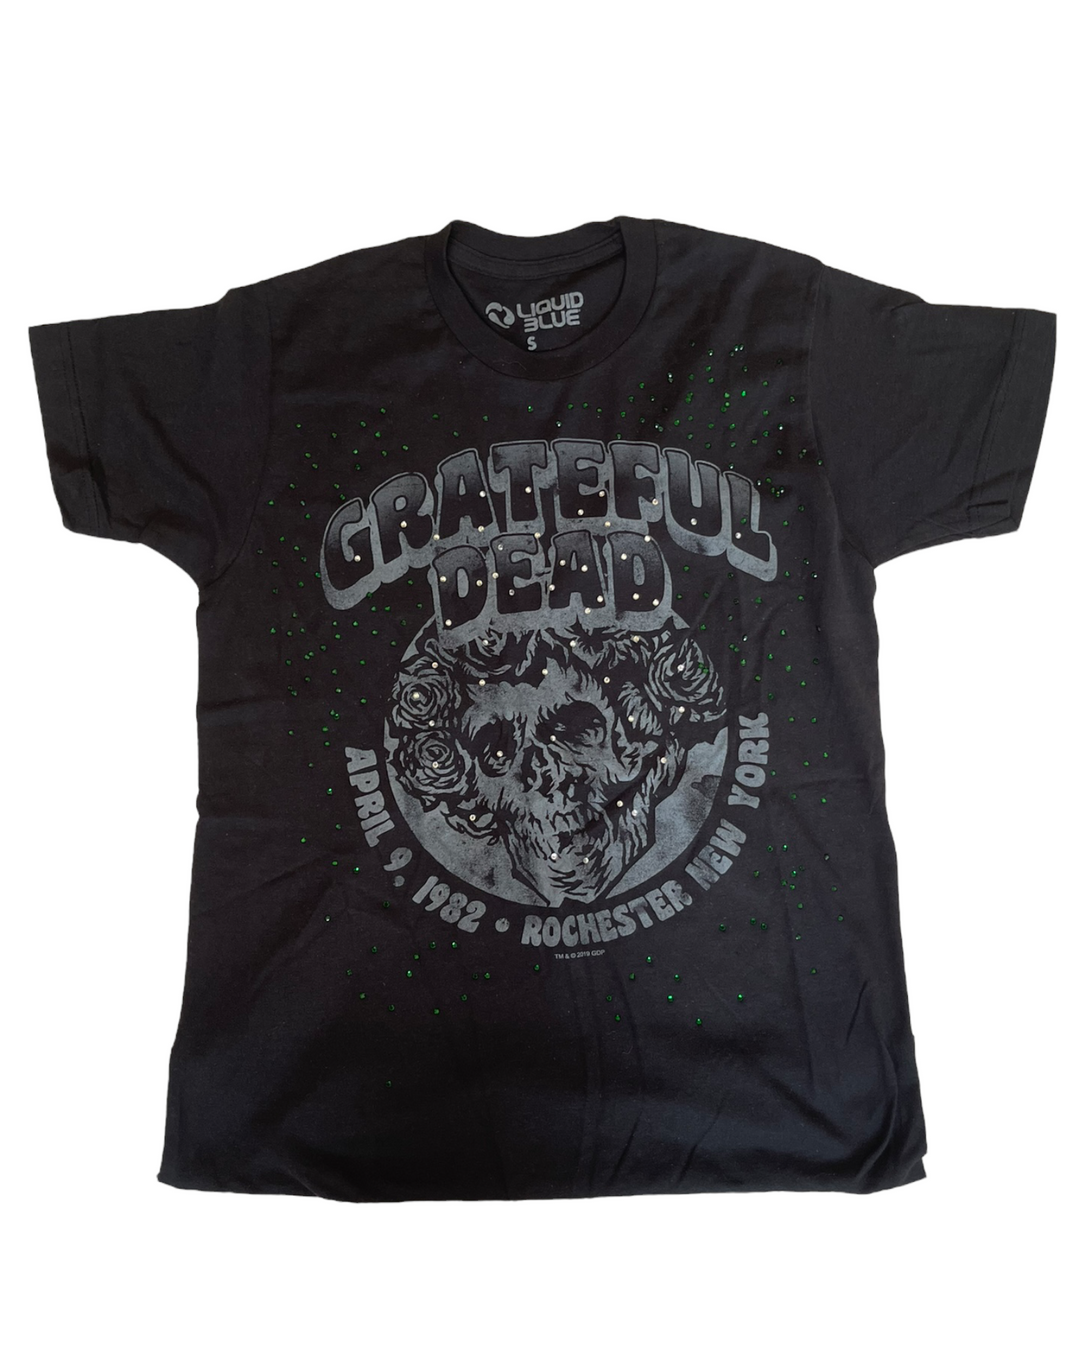 Grateful Dead Rhinestone T-Shirt